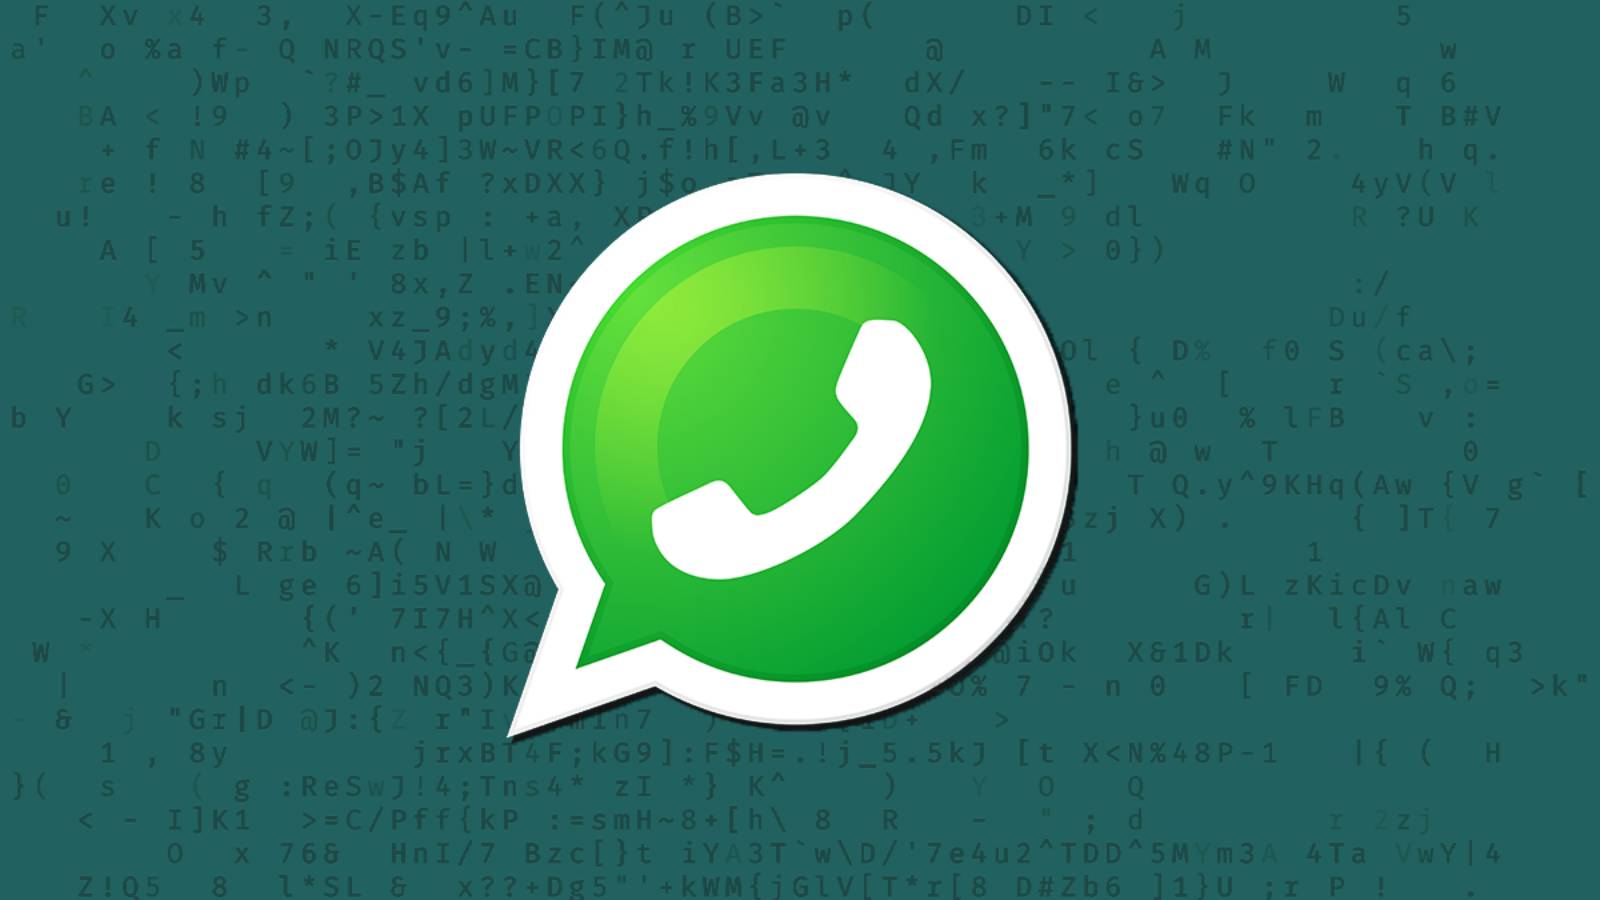 whatsapp fixare mesaje multiple